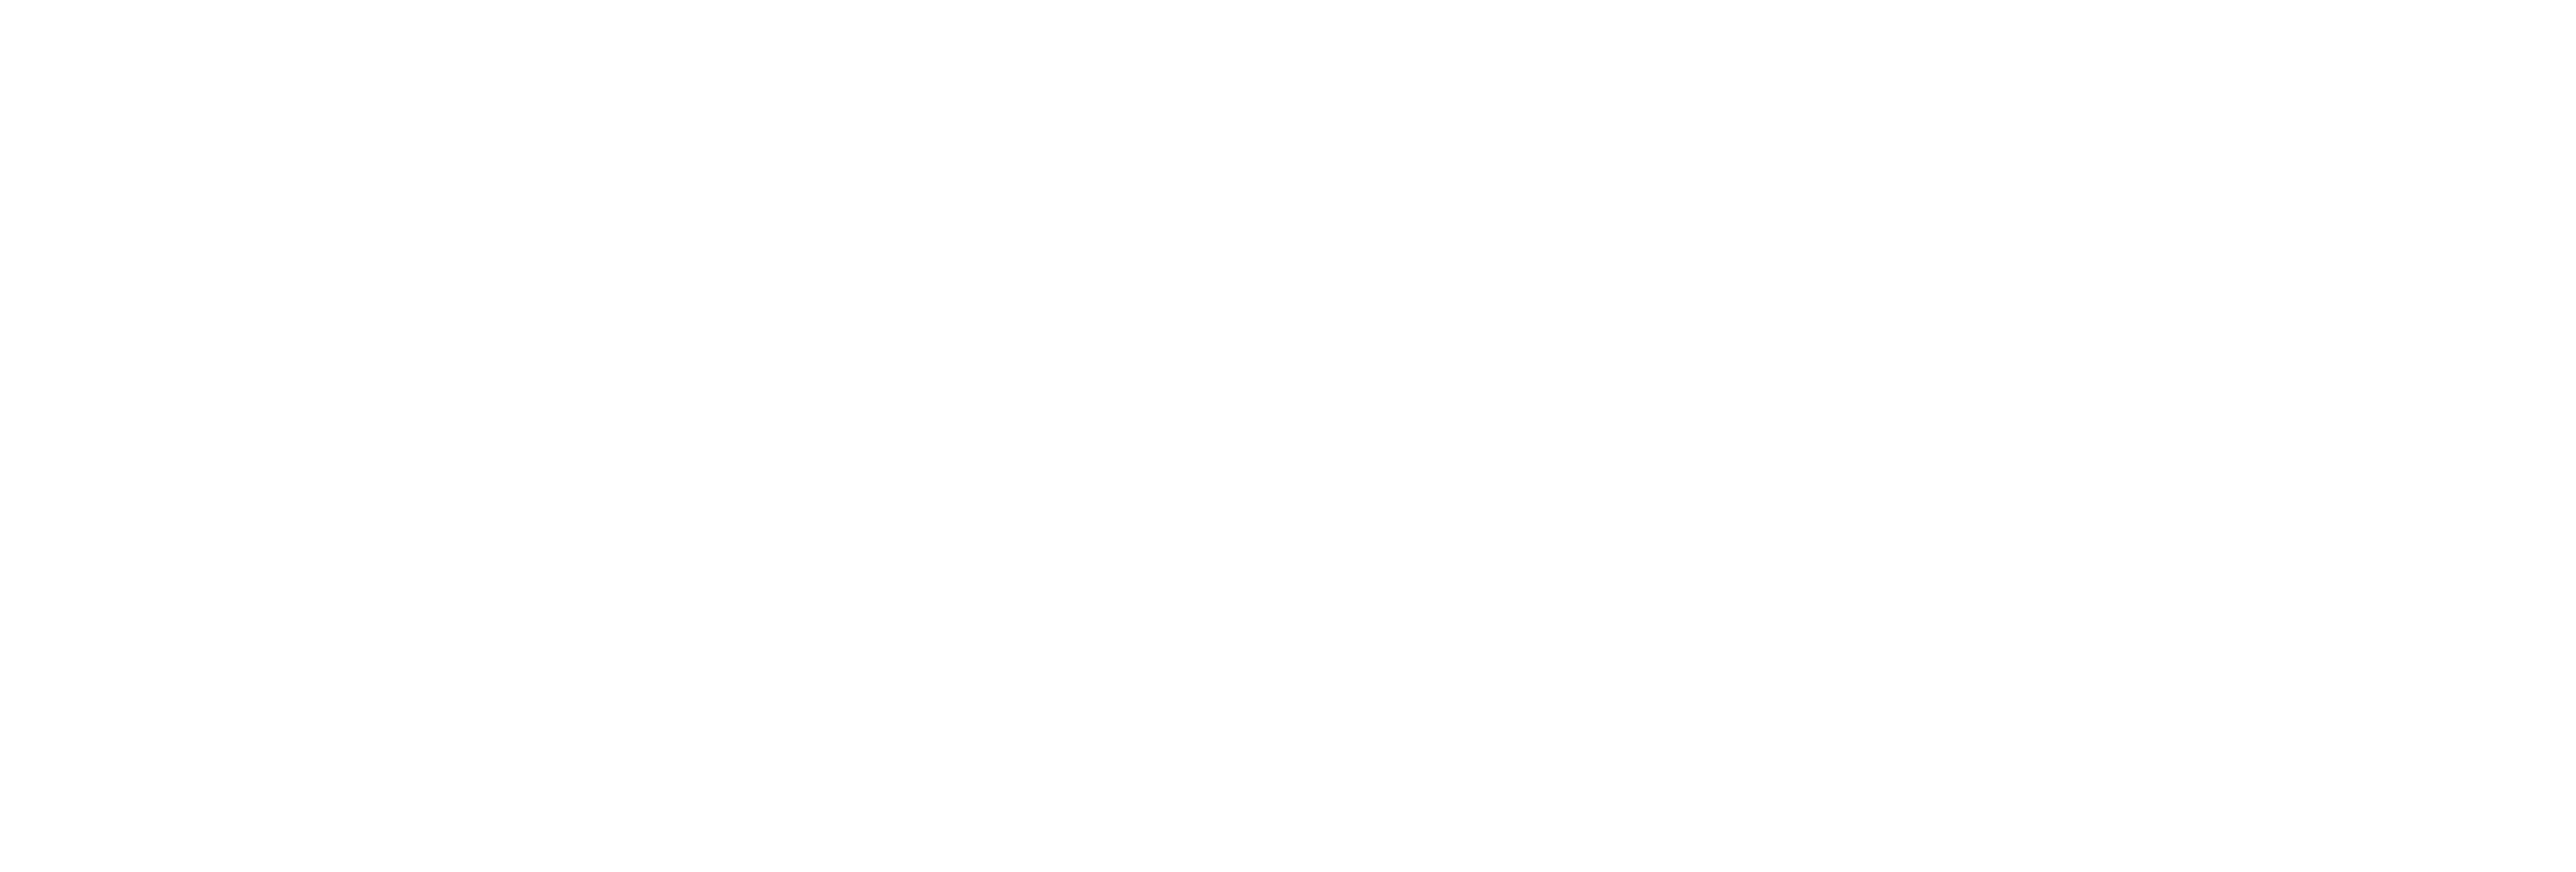 TotalWorx Logo and slogan: Simplicity, Service, Satisfaction